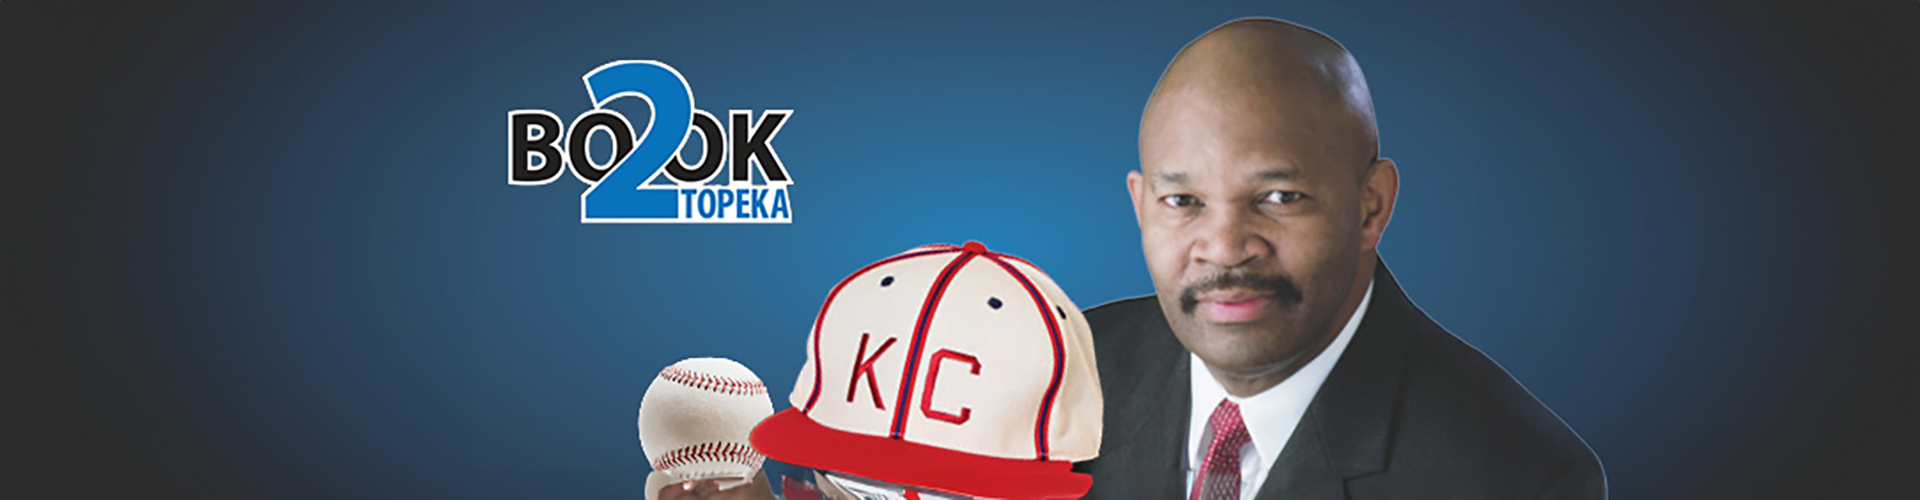 2book topeka web header. image of dixon with a baseball cap and ball